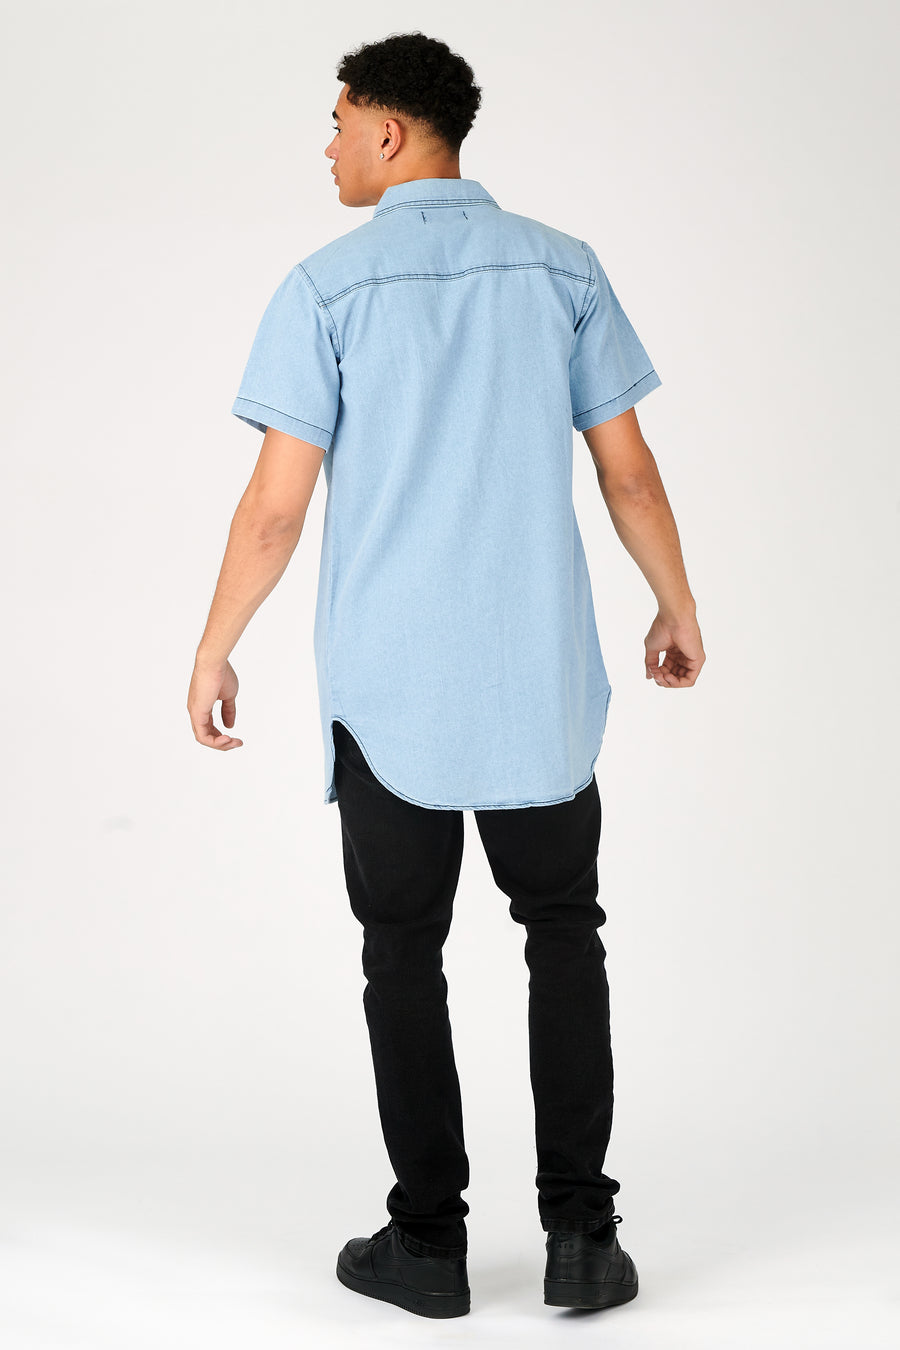 Body back  shot of a standing male model wearing a JMOJO Light Blue Wash Slim Fit Longline Short Sleeve Denim Shirt